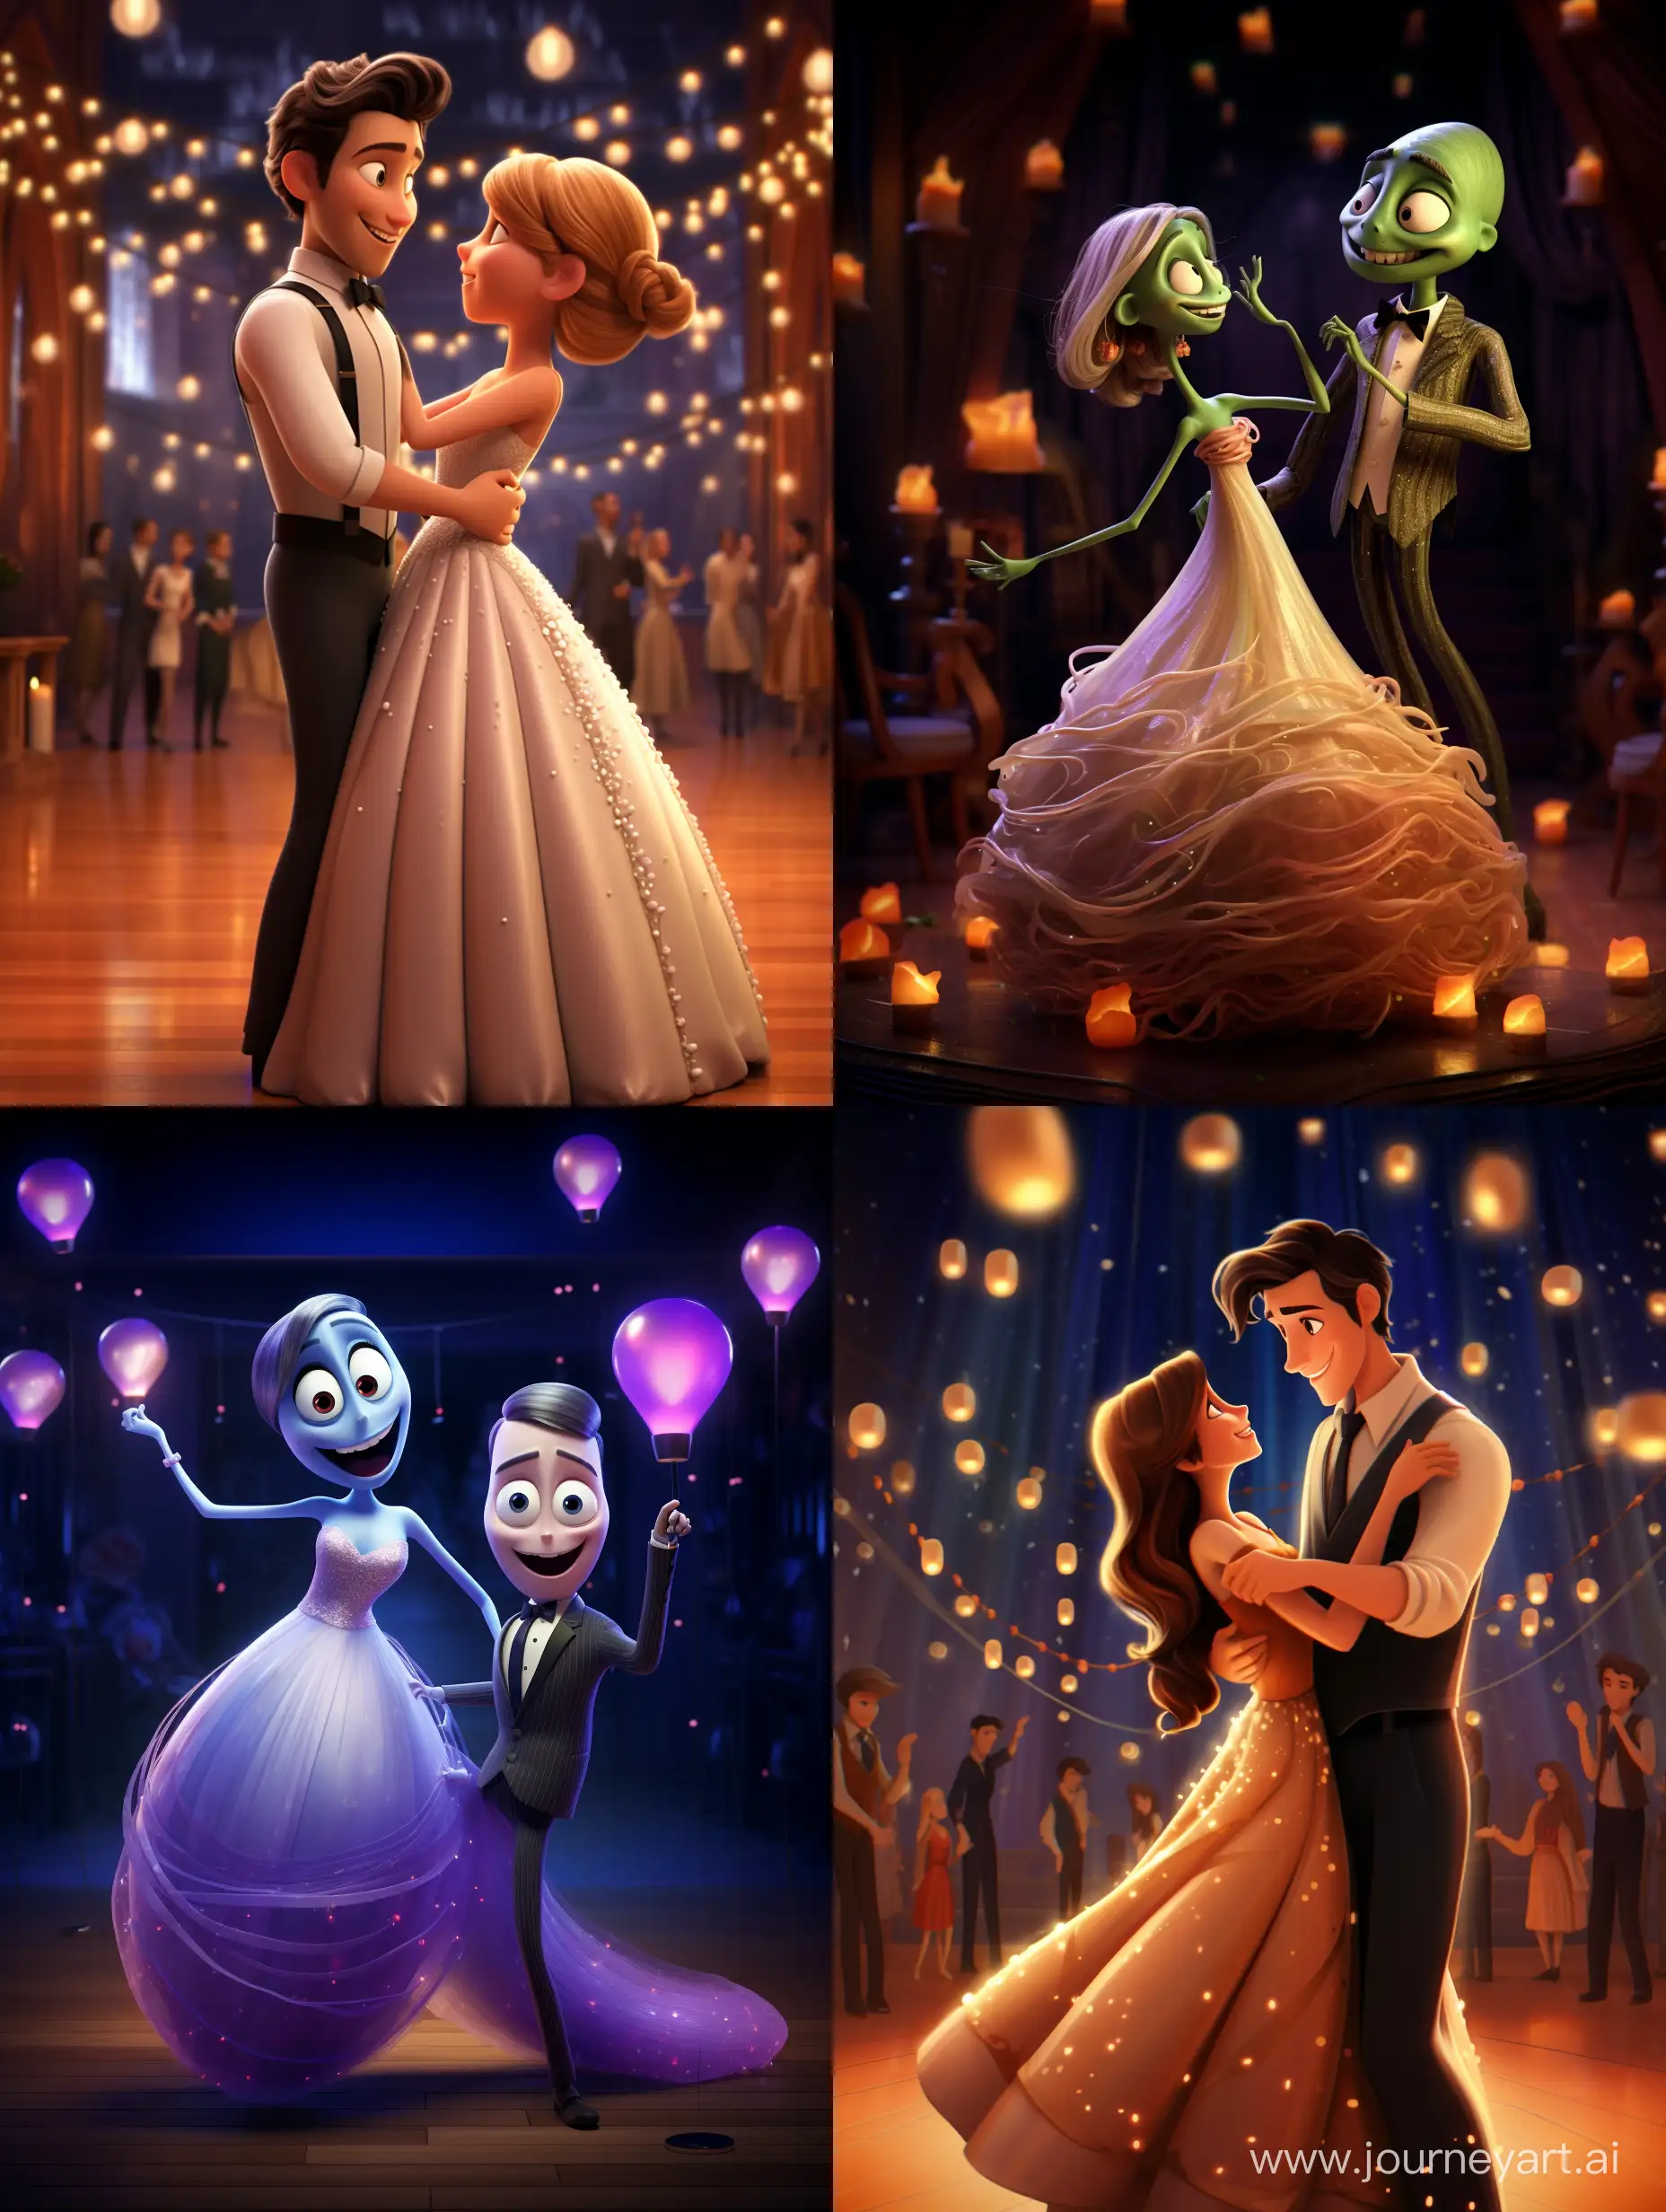 Elegant-Ballroom-Dance-in-Pixar-Style